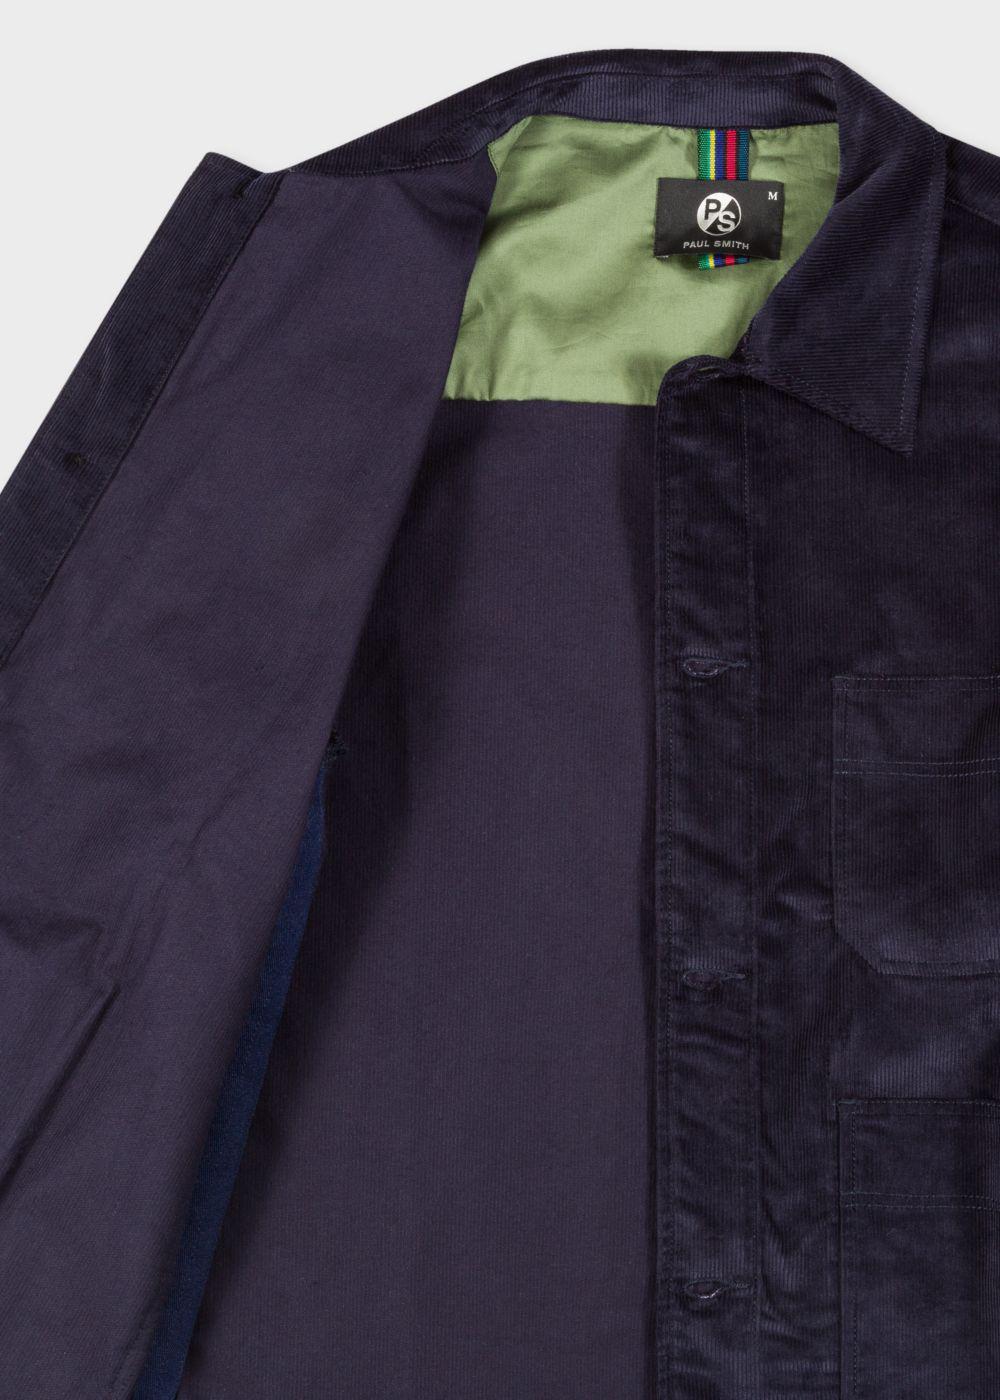 Paul Smith Men's Dark Navy Corduroy Chore Jacket in Blue for Men - Lyst